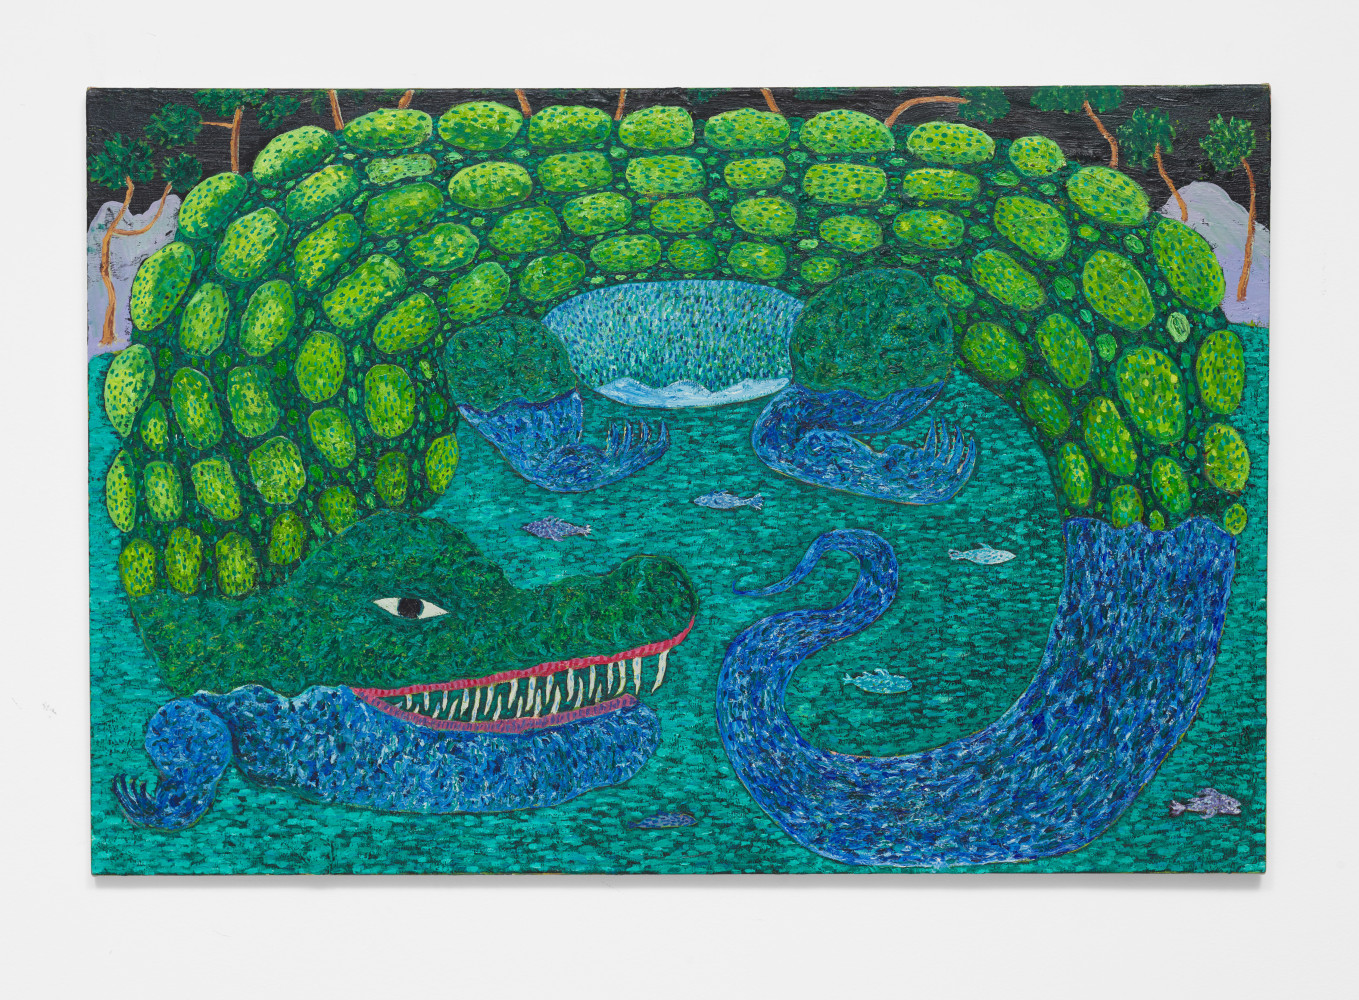 Mark Connolly
Crocodile, 2020
Oil on canvas
40.16h x 59.84w in
102h x 152w x 1.78d cm